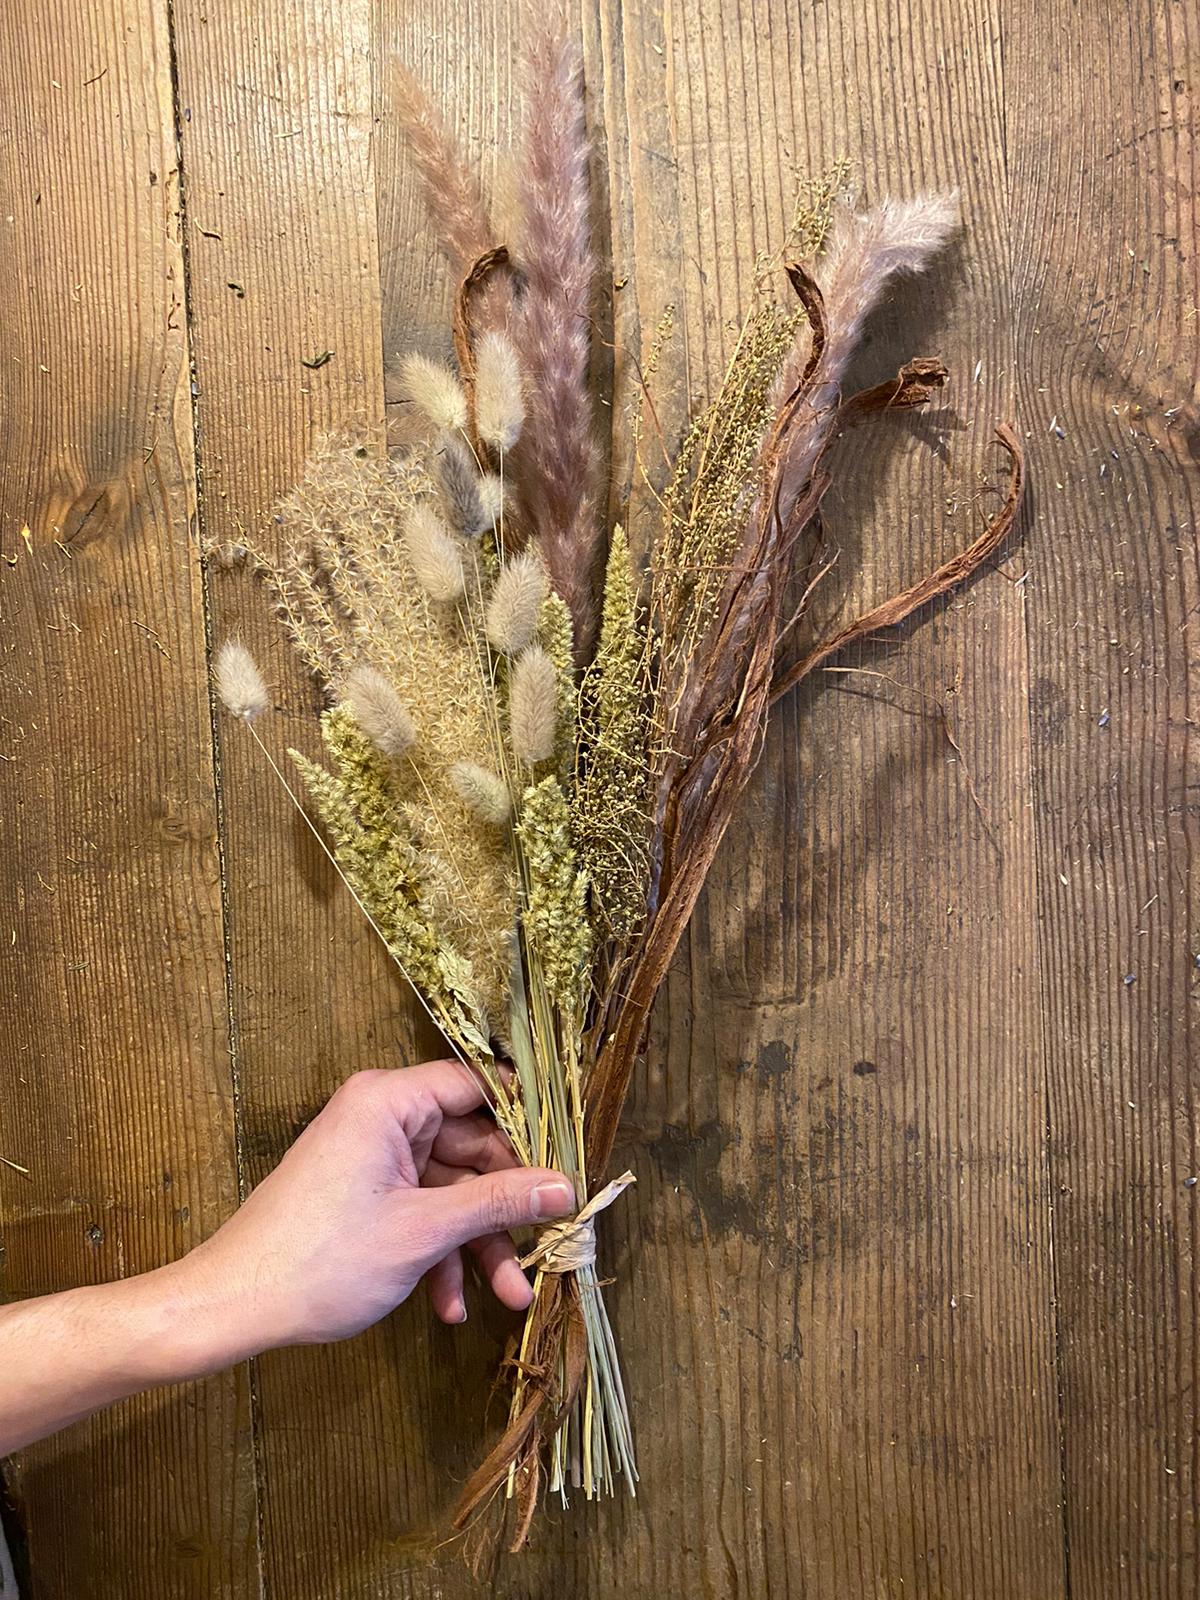 V.VM Dried Flower Bouquet - Soft Pampas